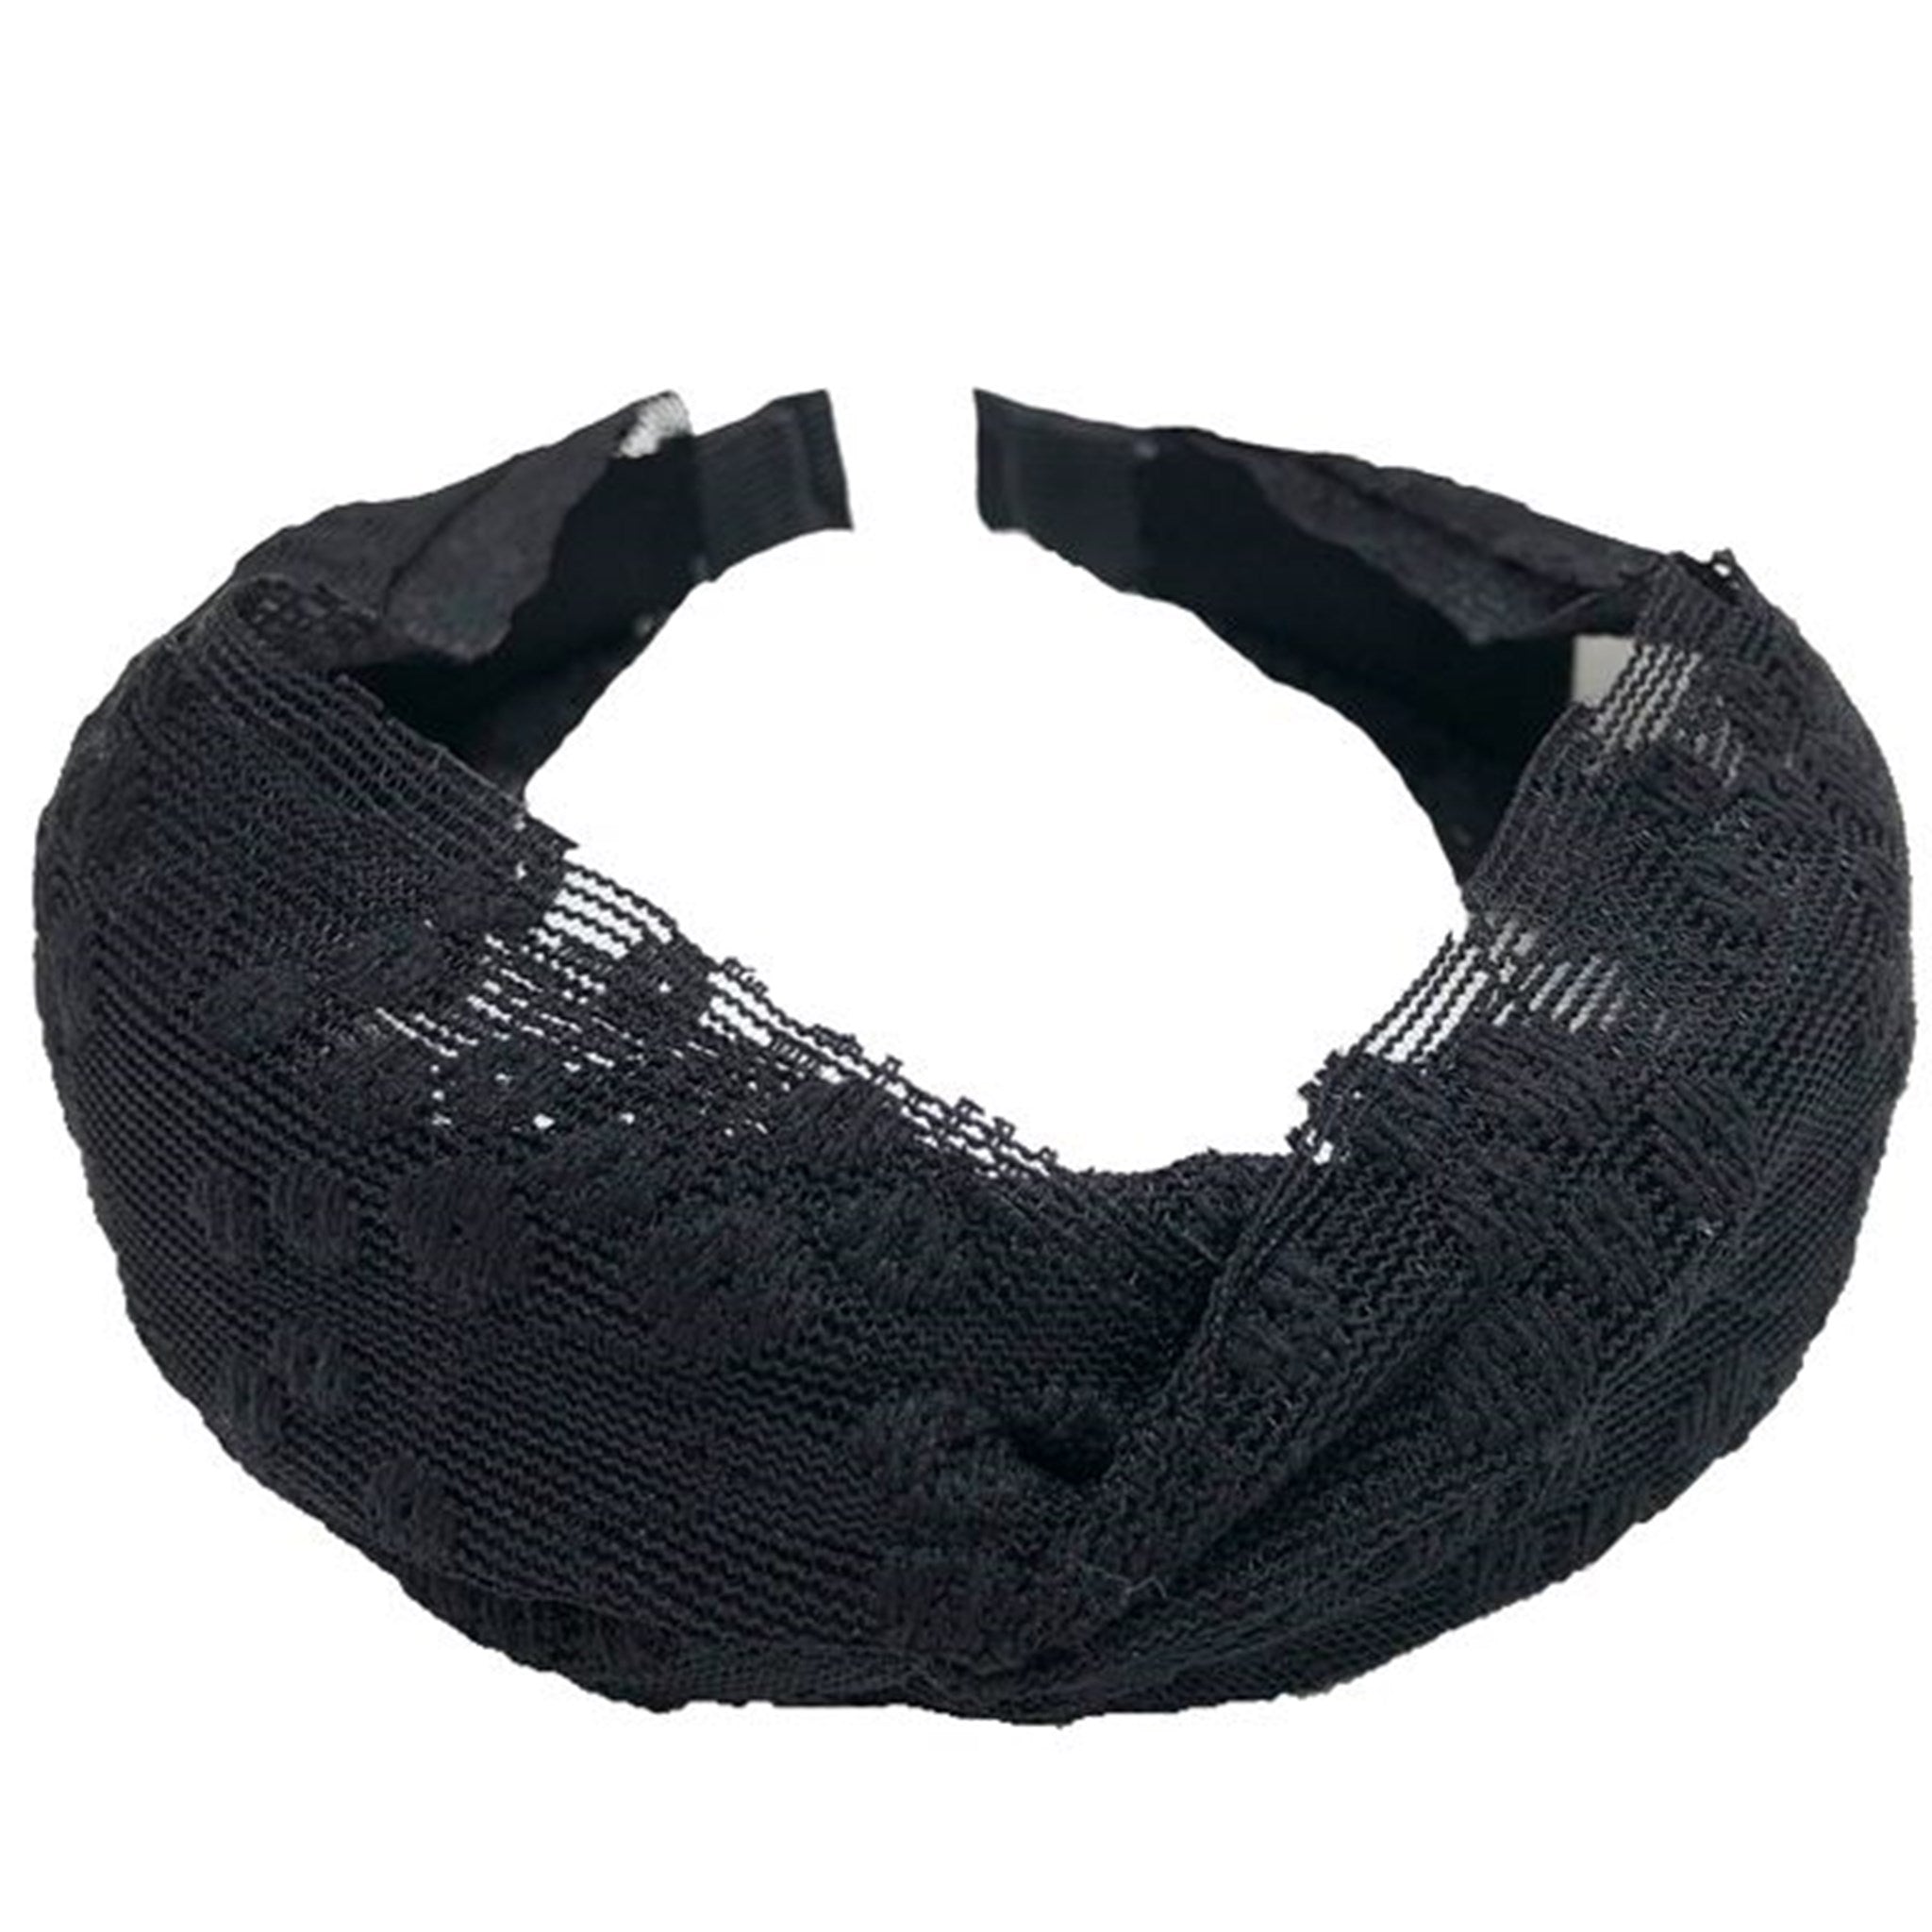 Léhof Hairband Lace Black